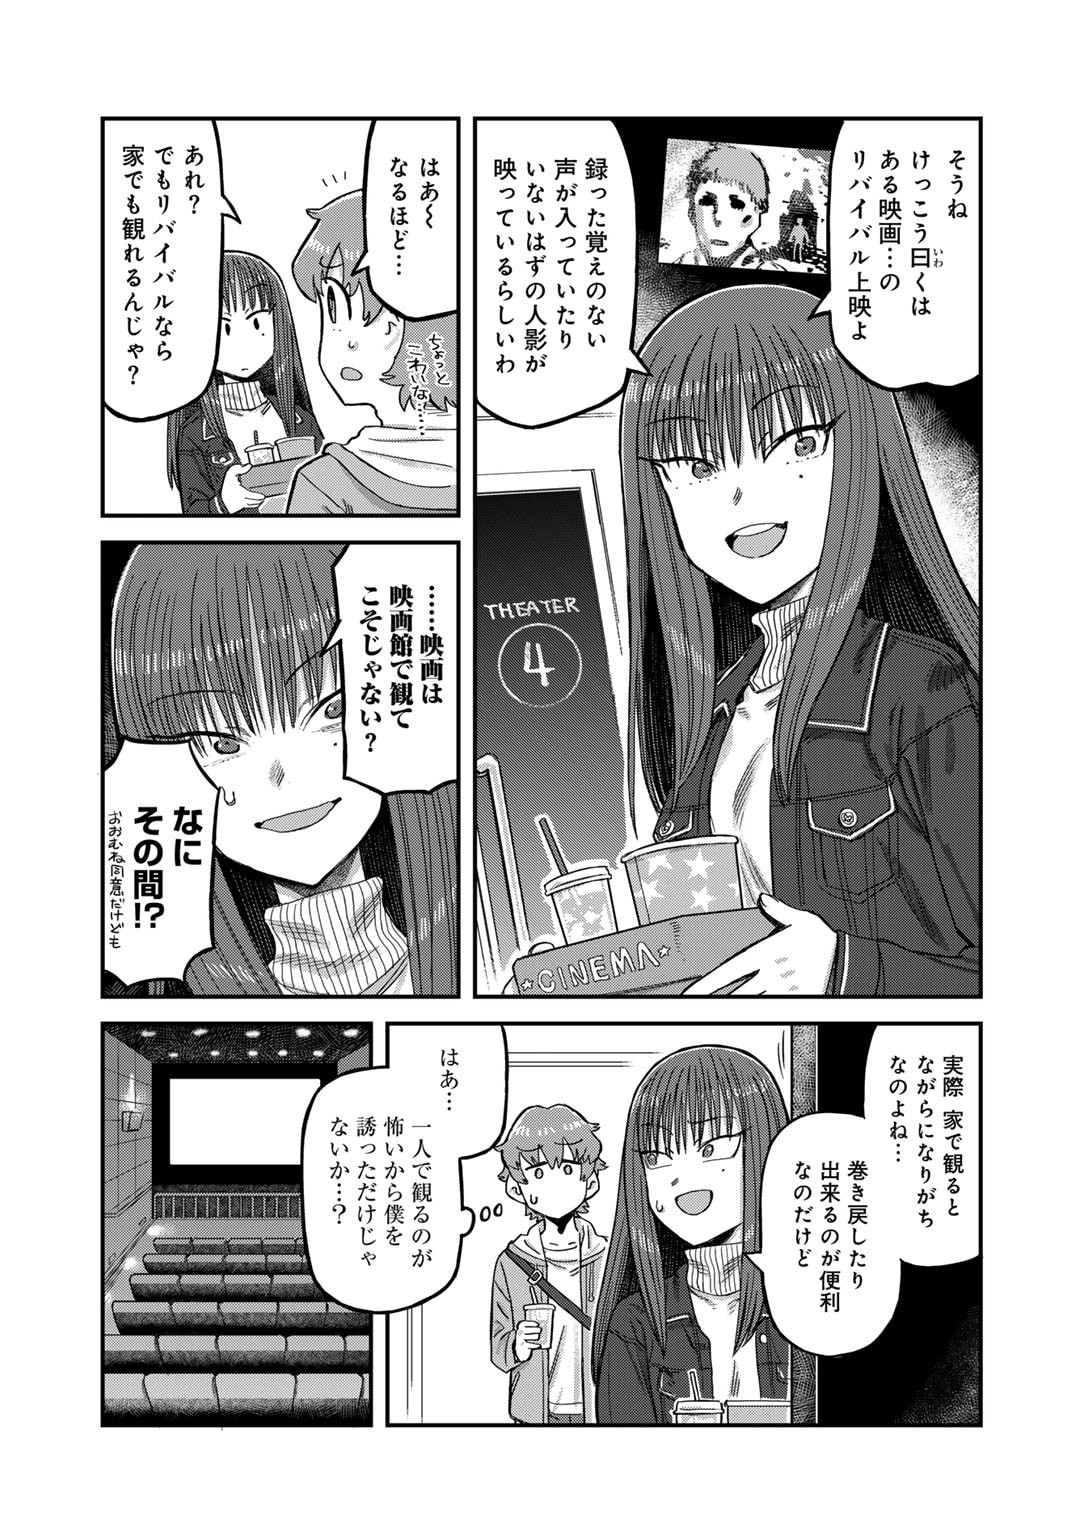 Kurono-san wa Occult ga Suki! - Chapter 6 - Page 5